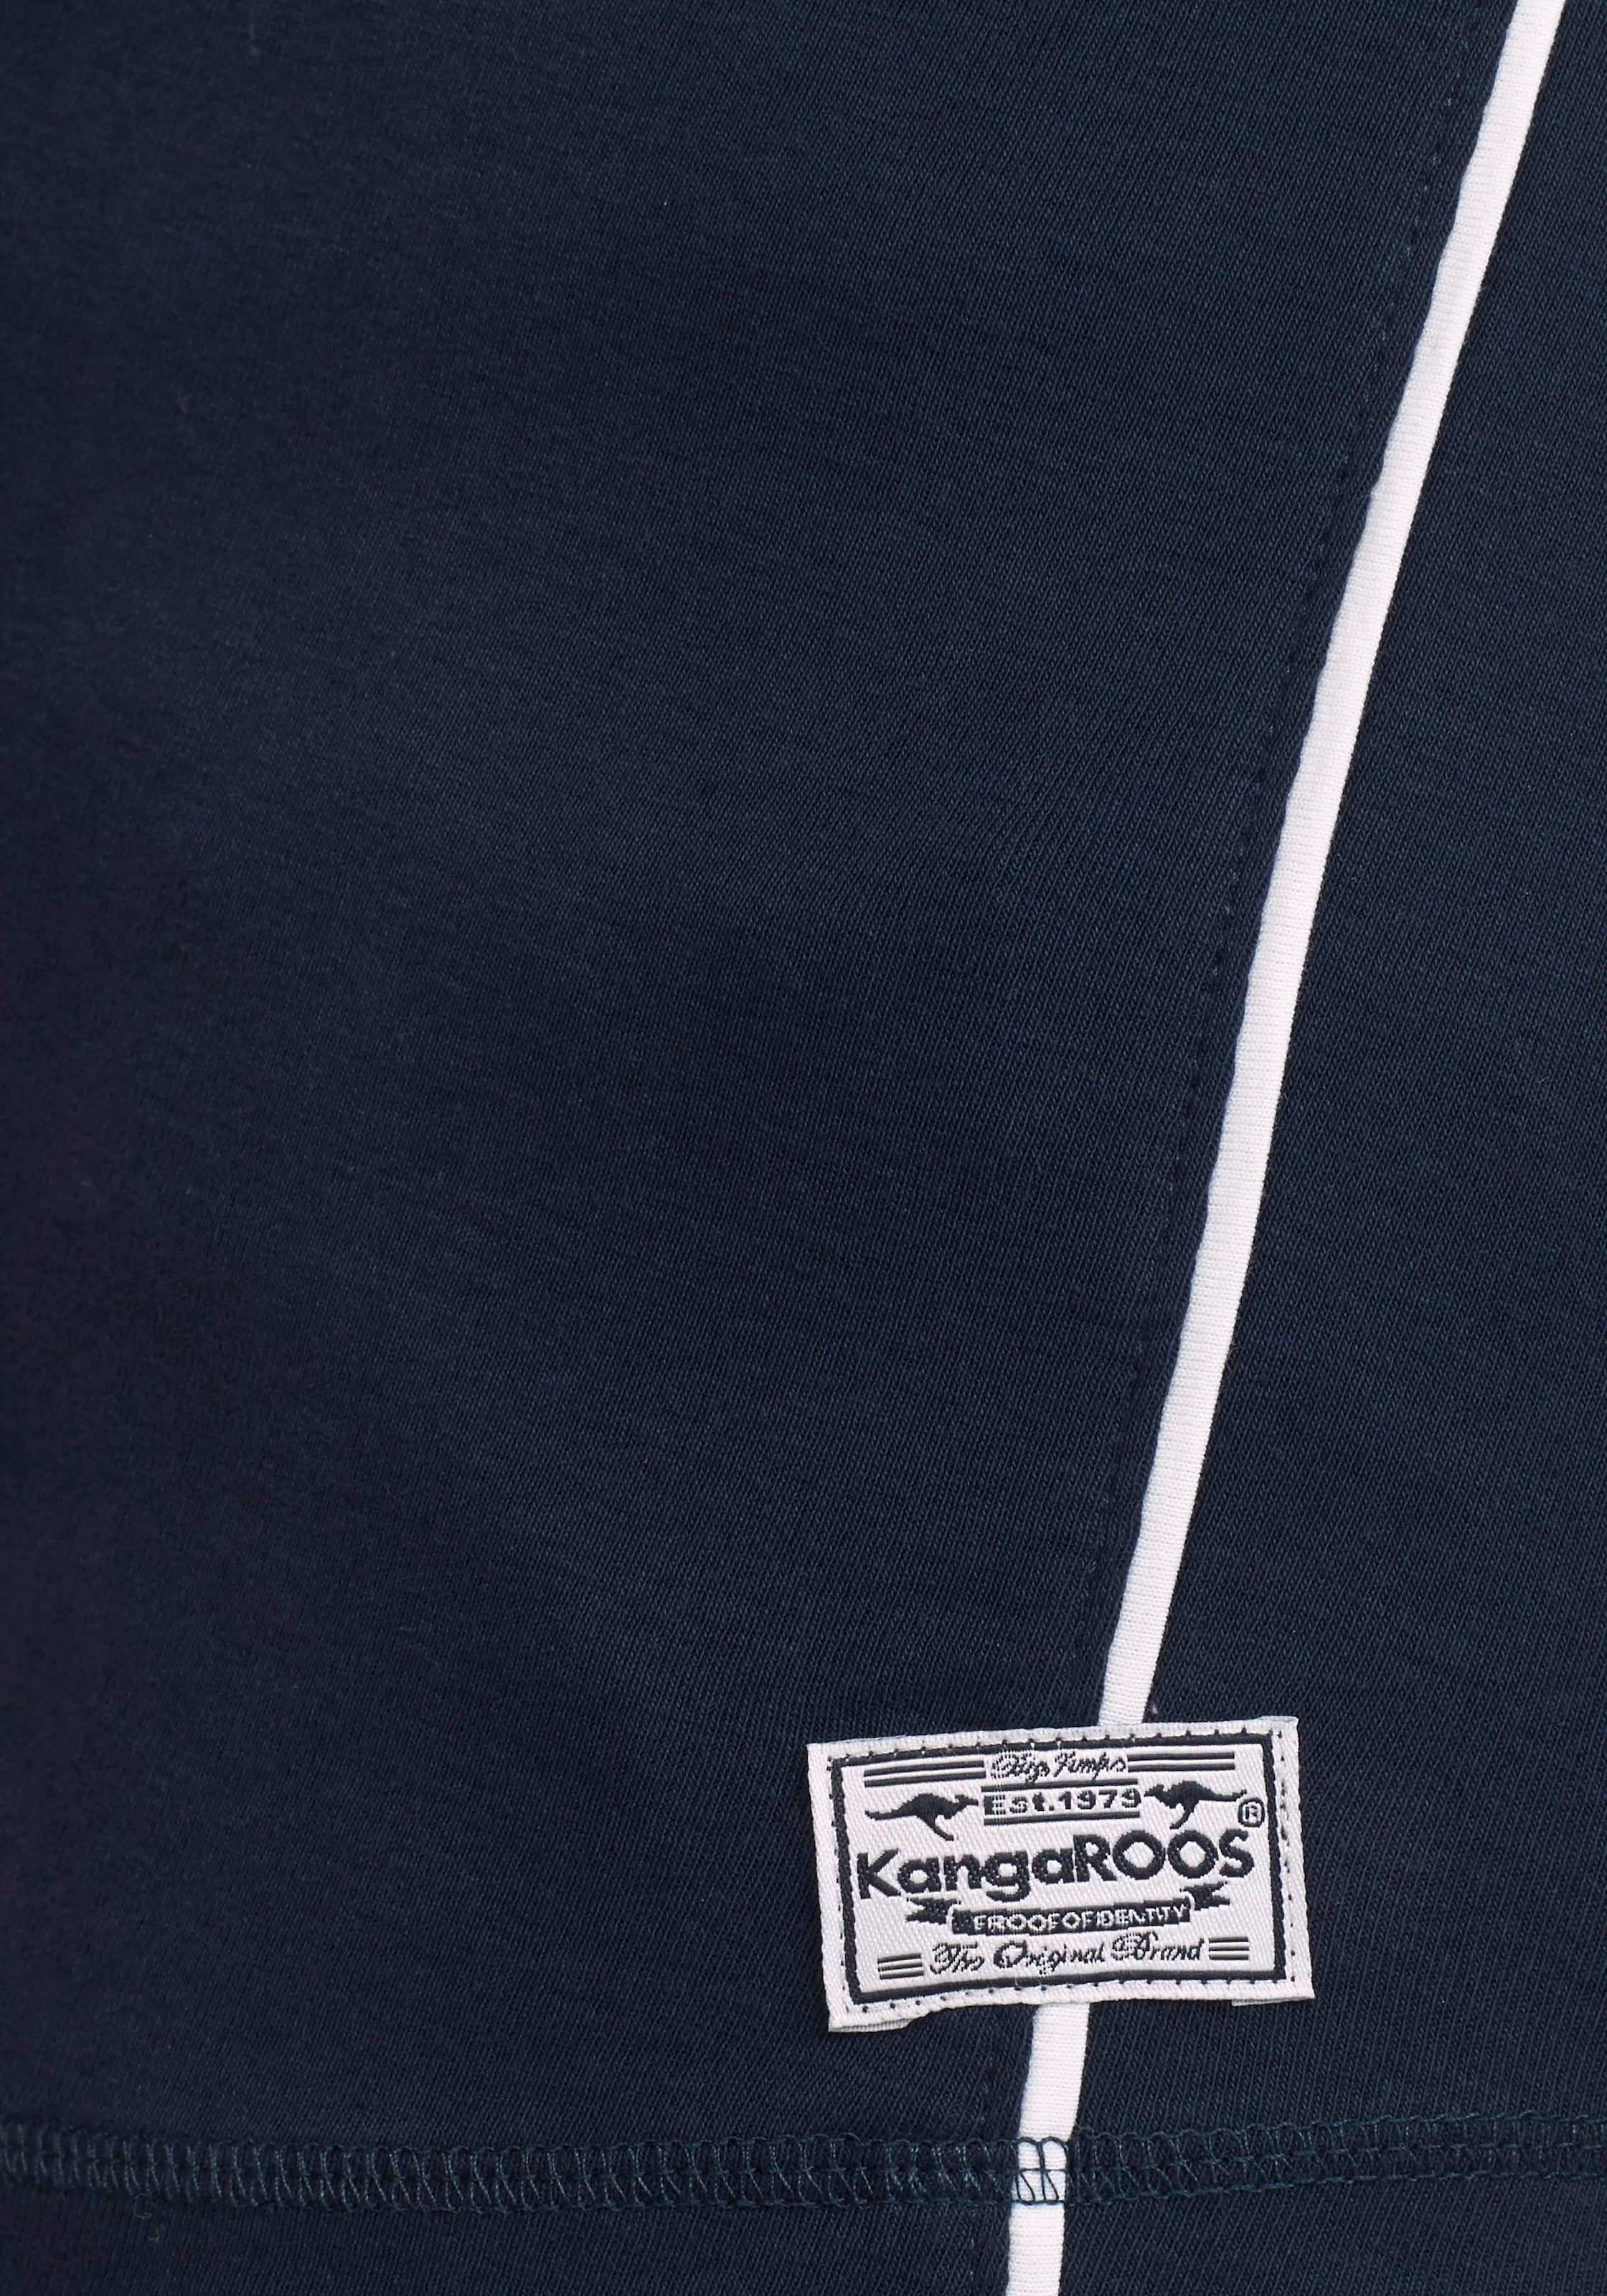 KangaROOS Langarmshirt mit Kontrastpaspelierung vorne | BAUR